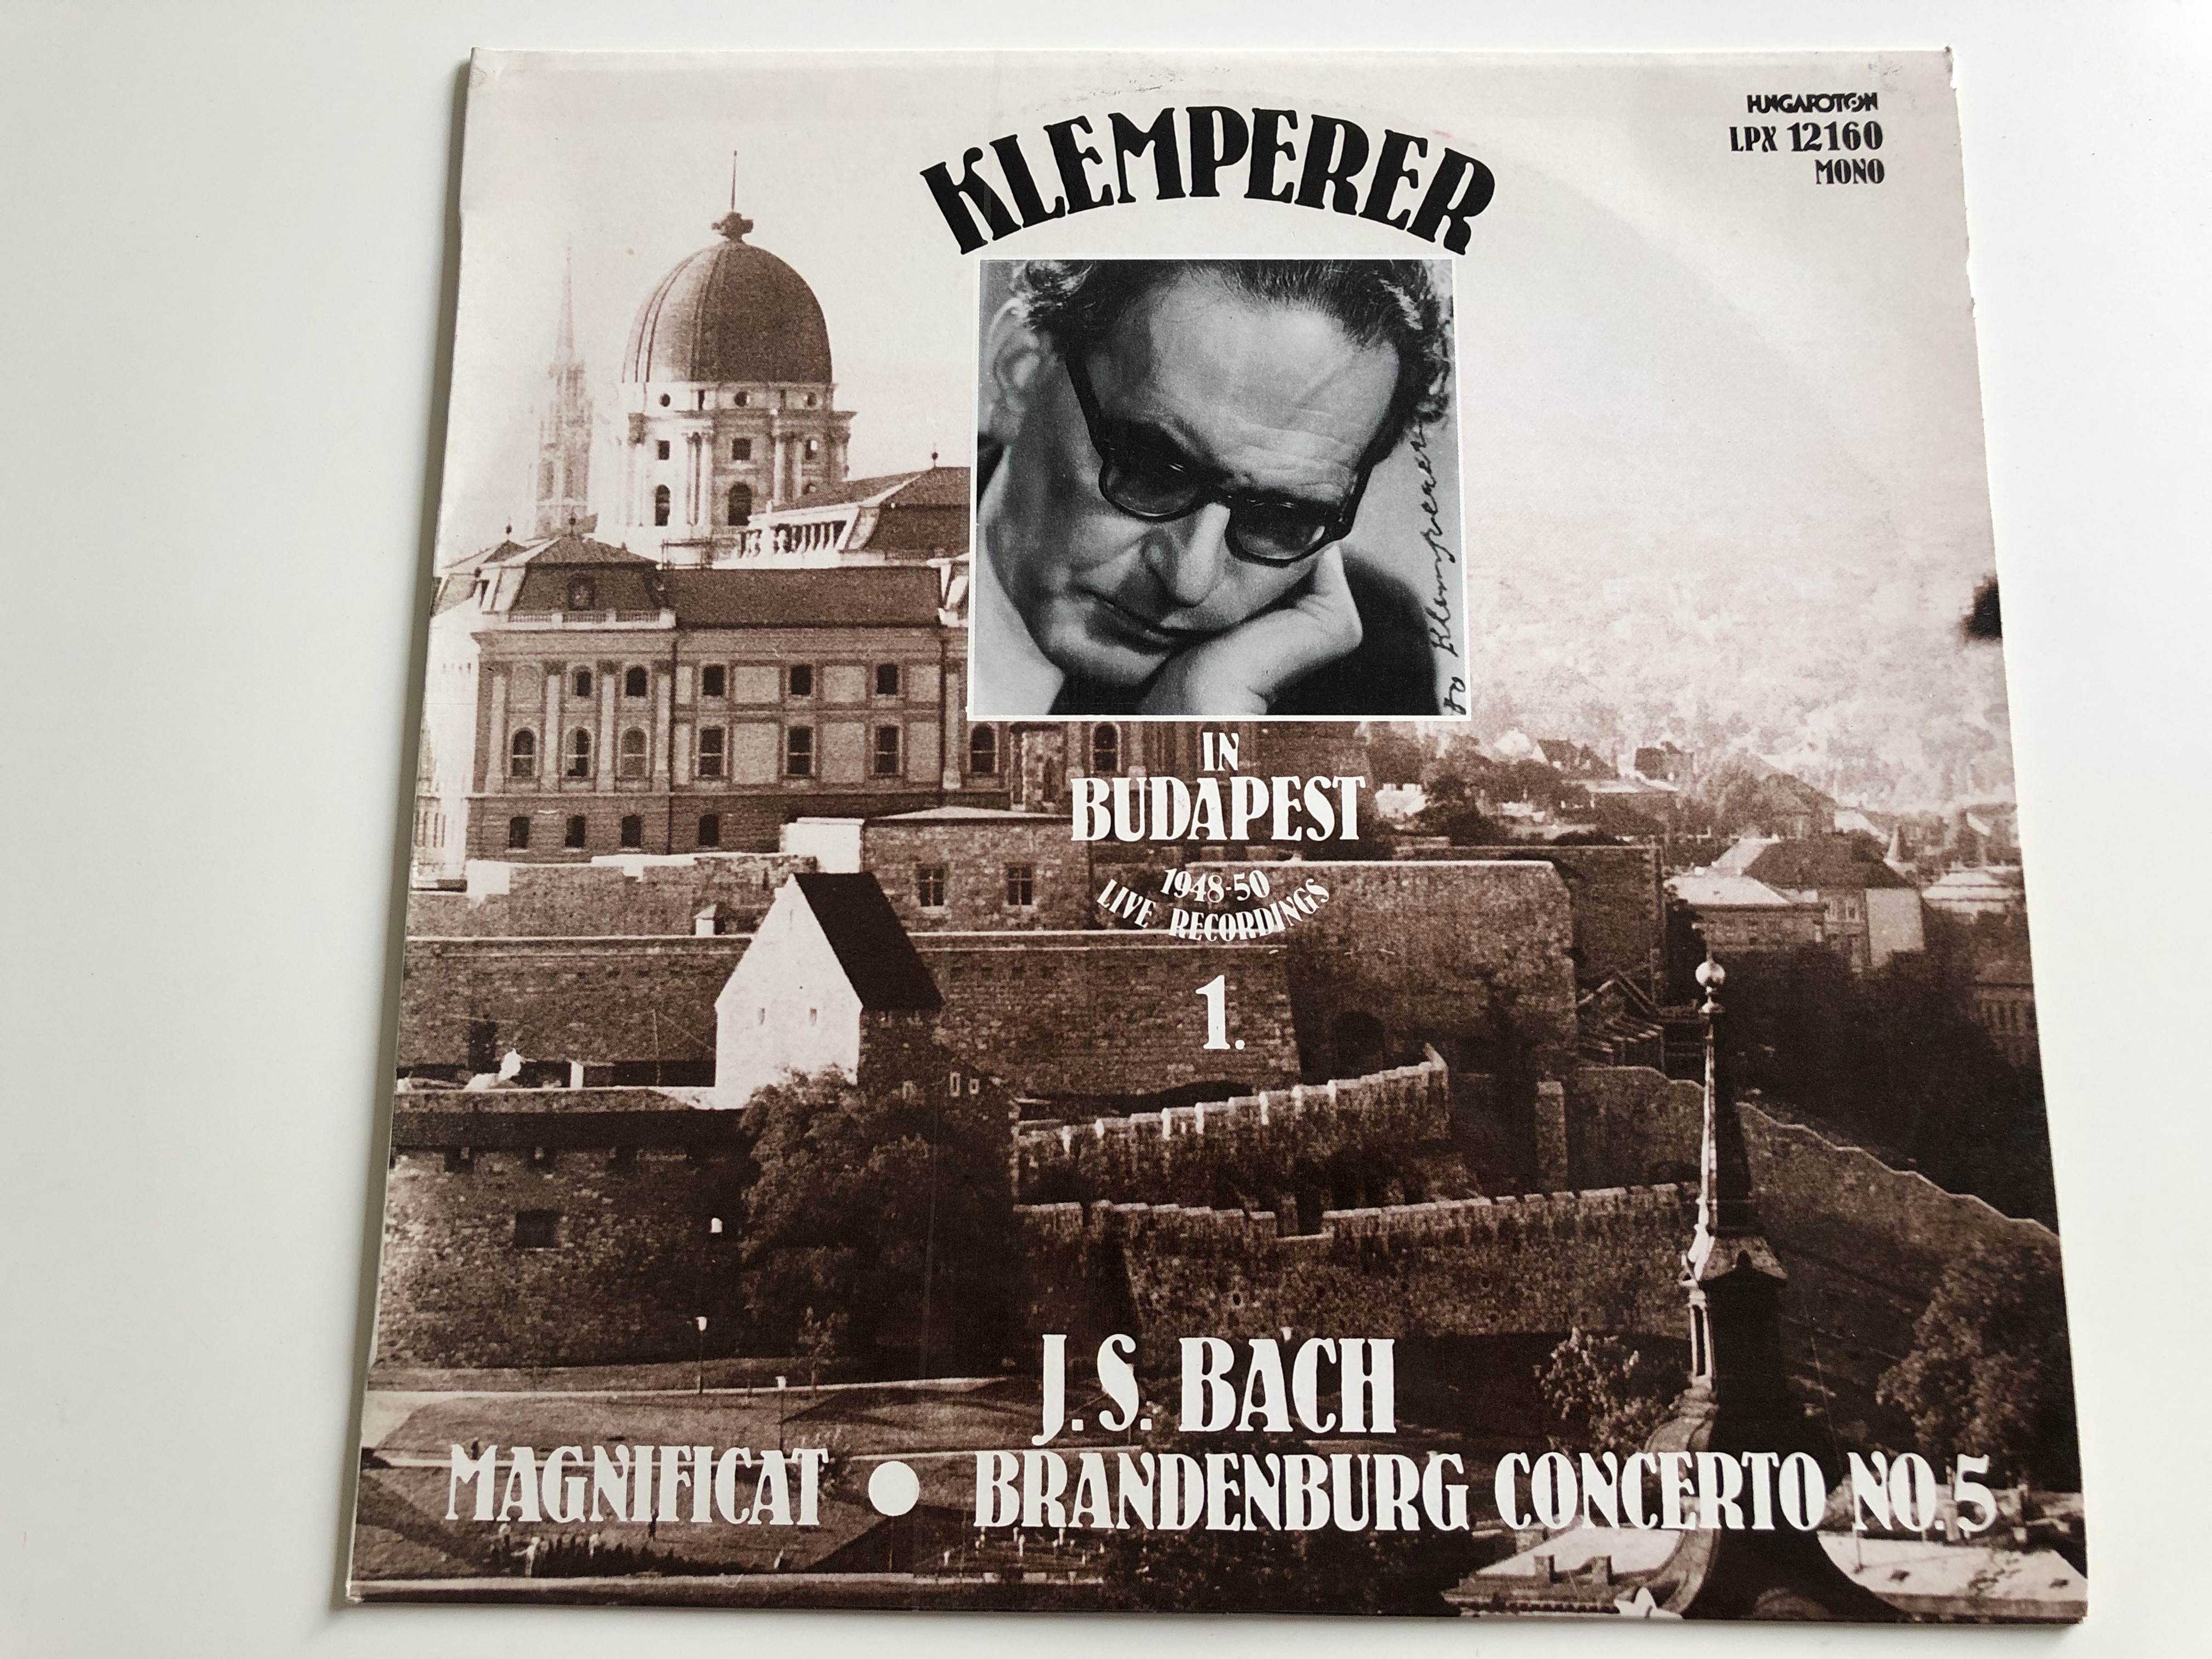 klemperer-j.-s.-bach-magnificat-brandenburg-concerto-no.-5-in-budapest-1948-50-live-recordings-1.-hungaroton-lp-mono-lpx-12160-1-.jpg